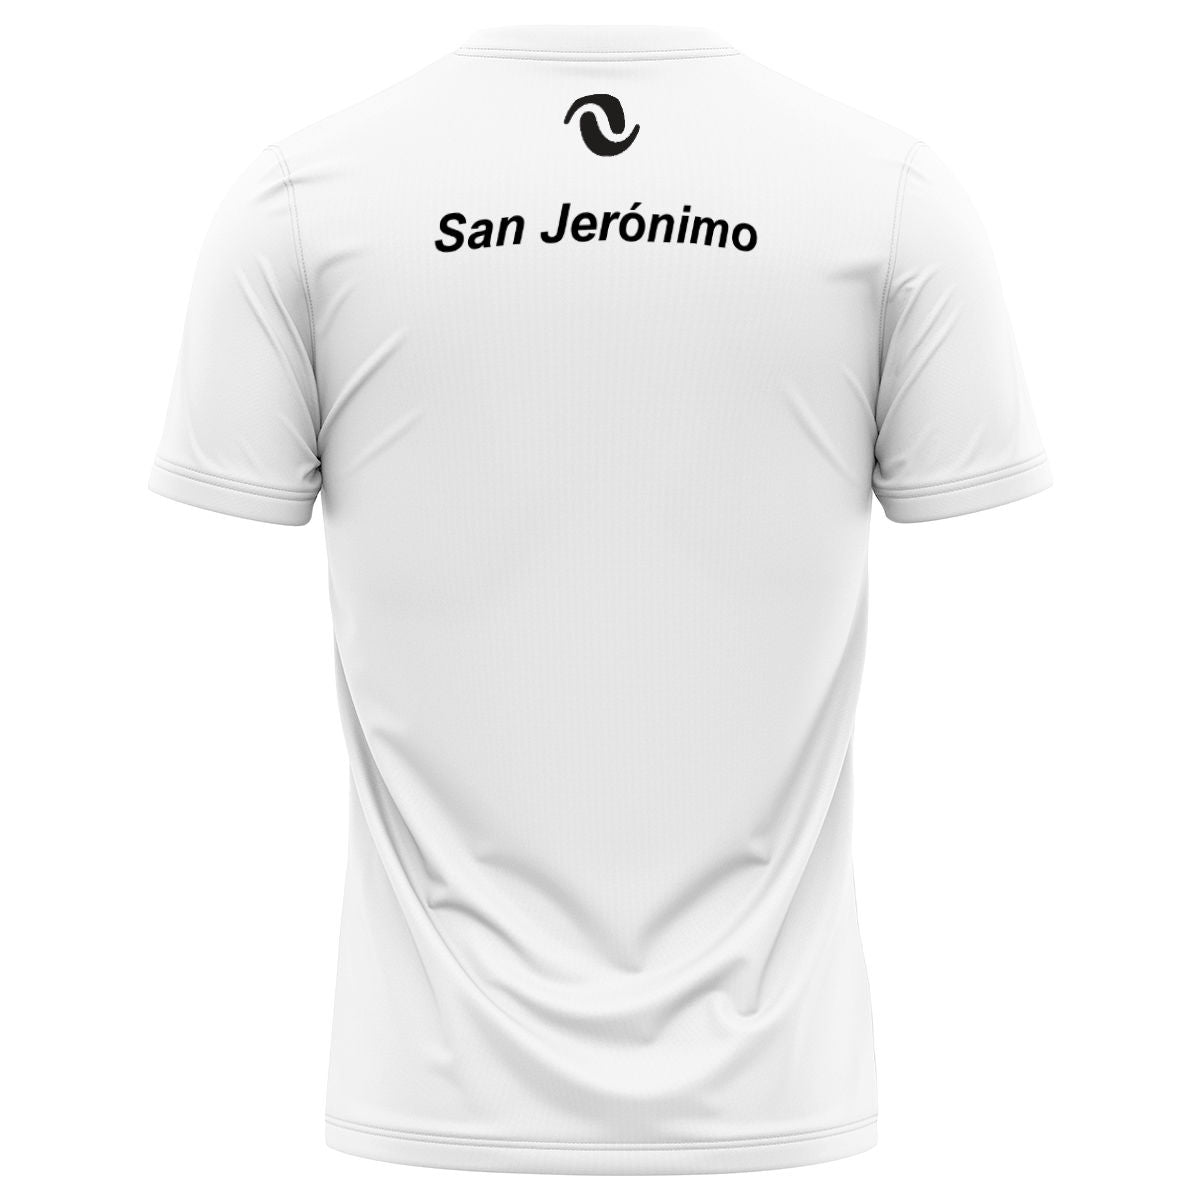 NV San Jerónimo - Performance Shirt